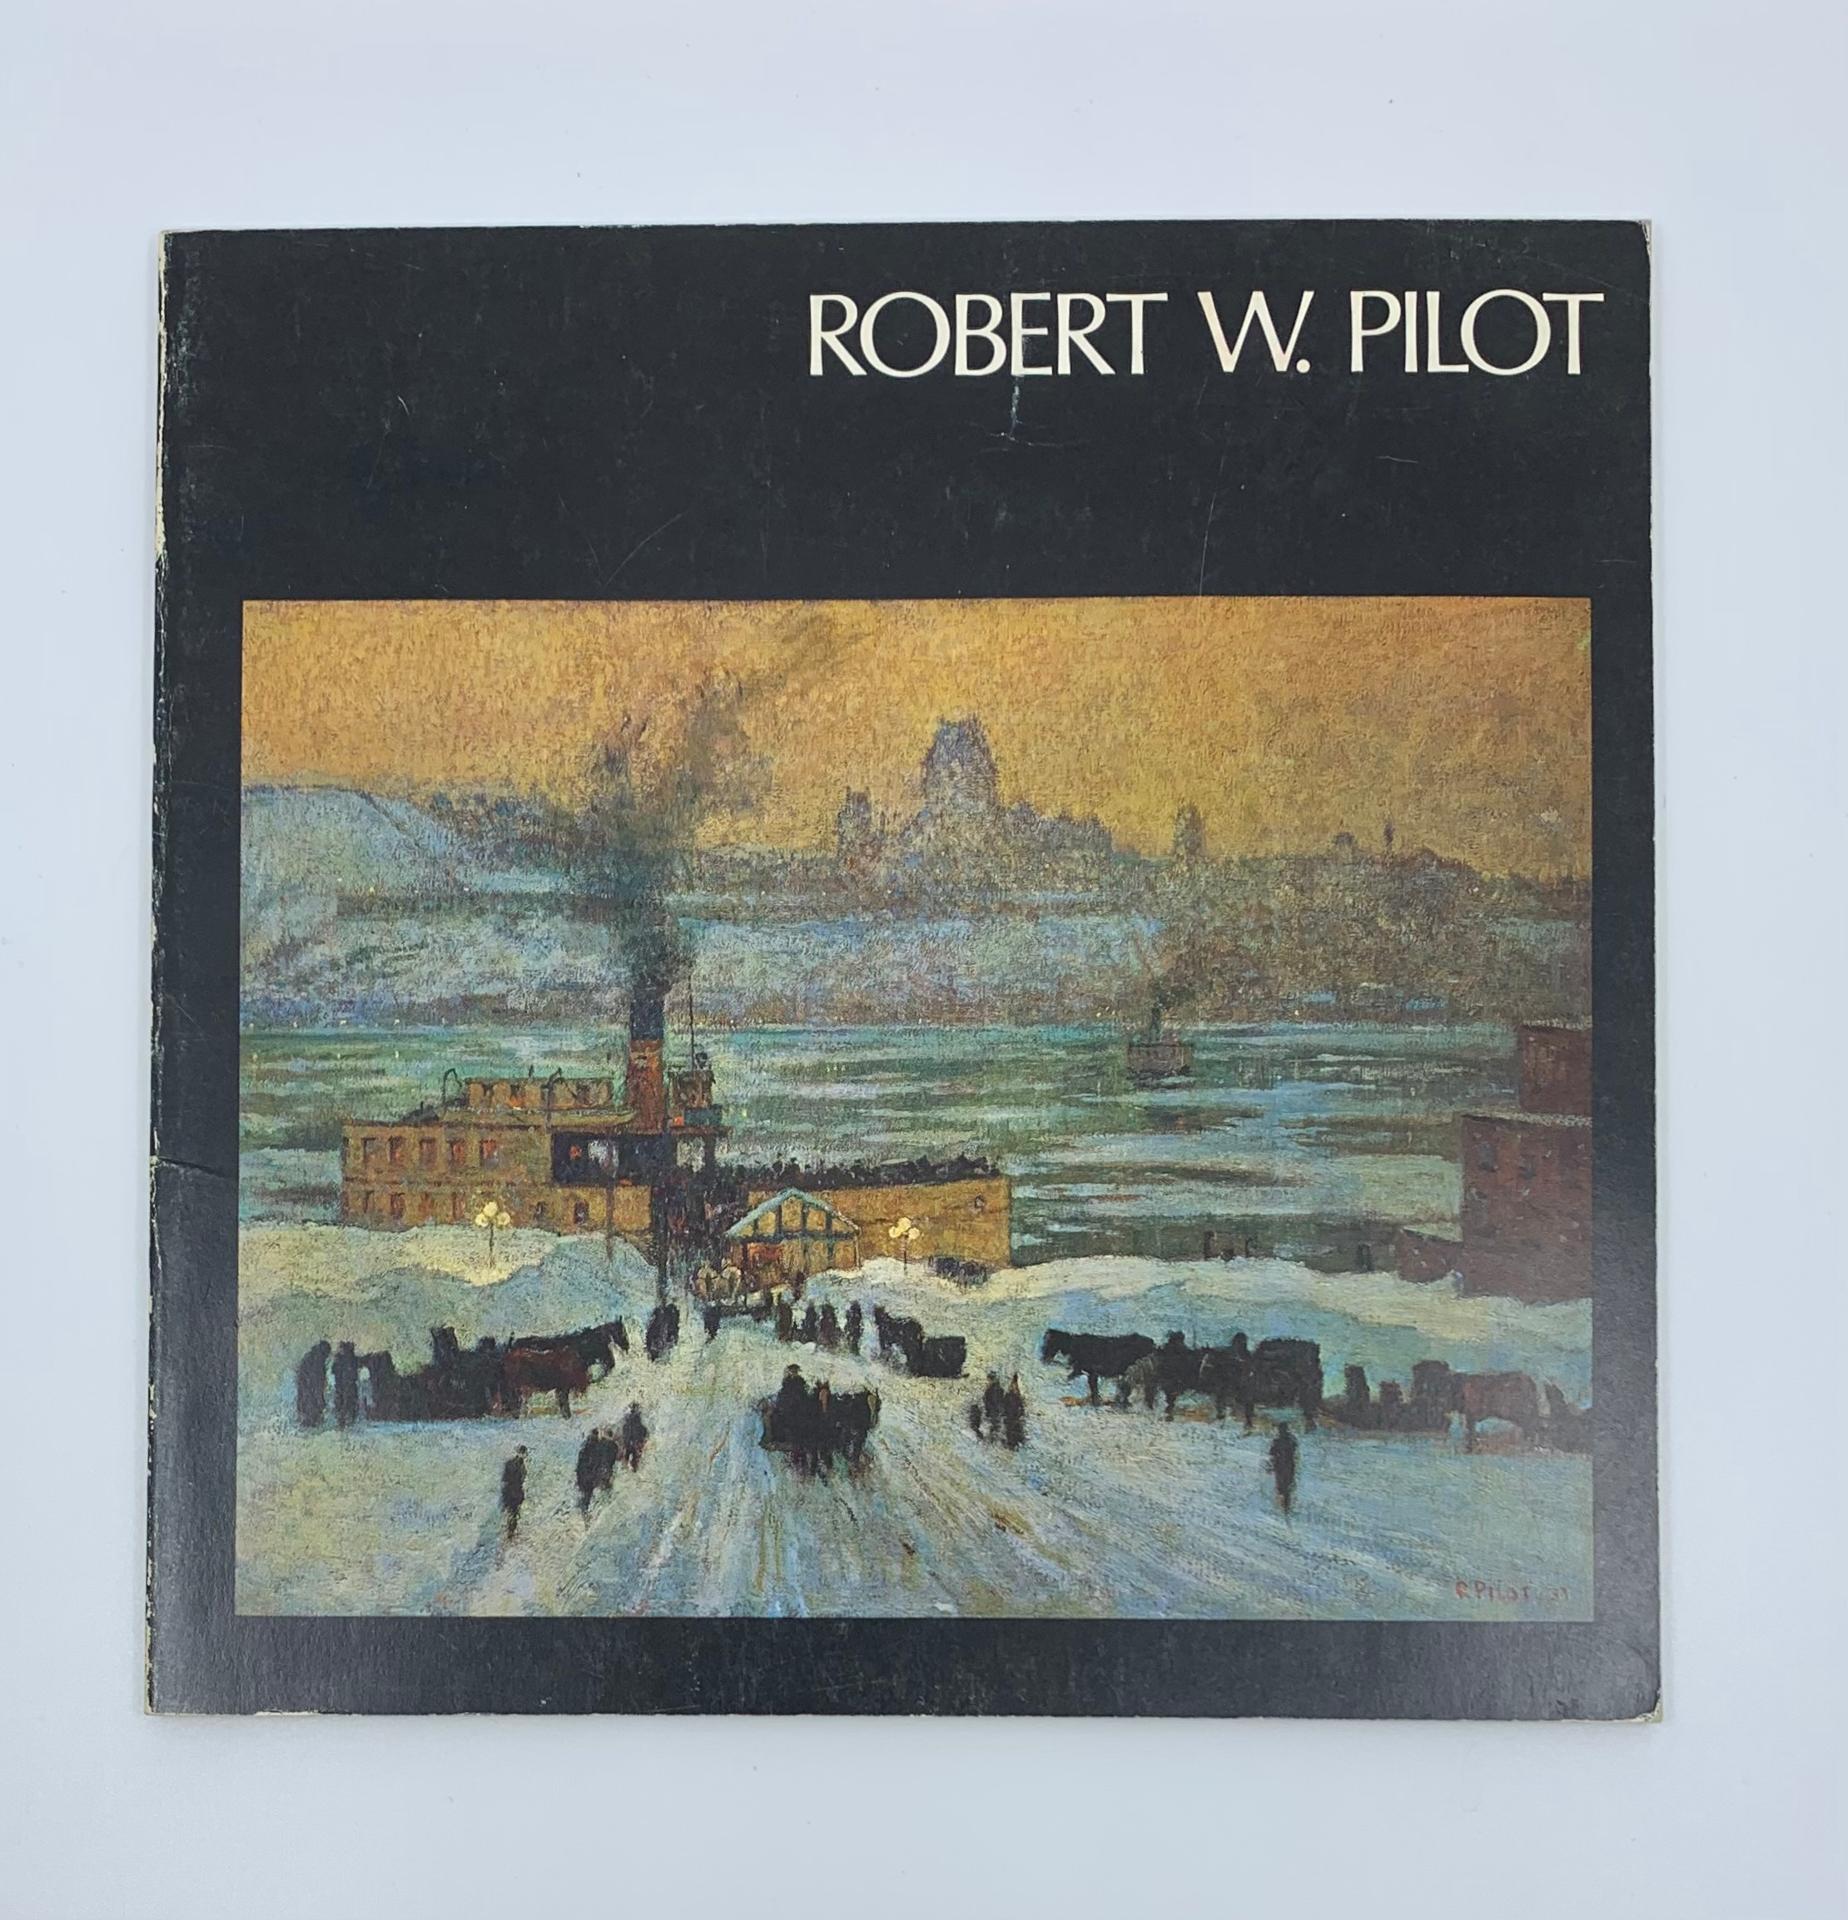 Robert Wakeham Pilot (1898-1967) - Retrospective Robert W. Pilot, 1969